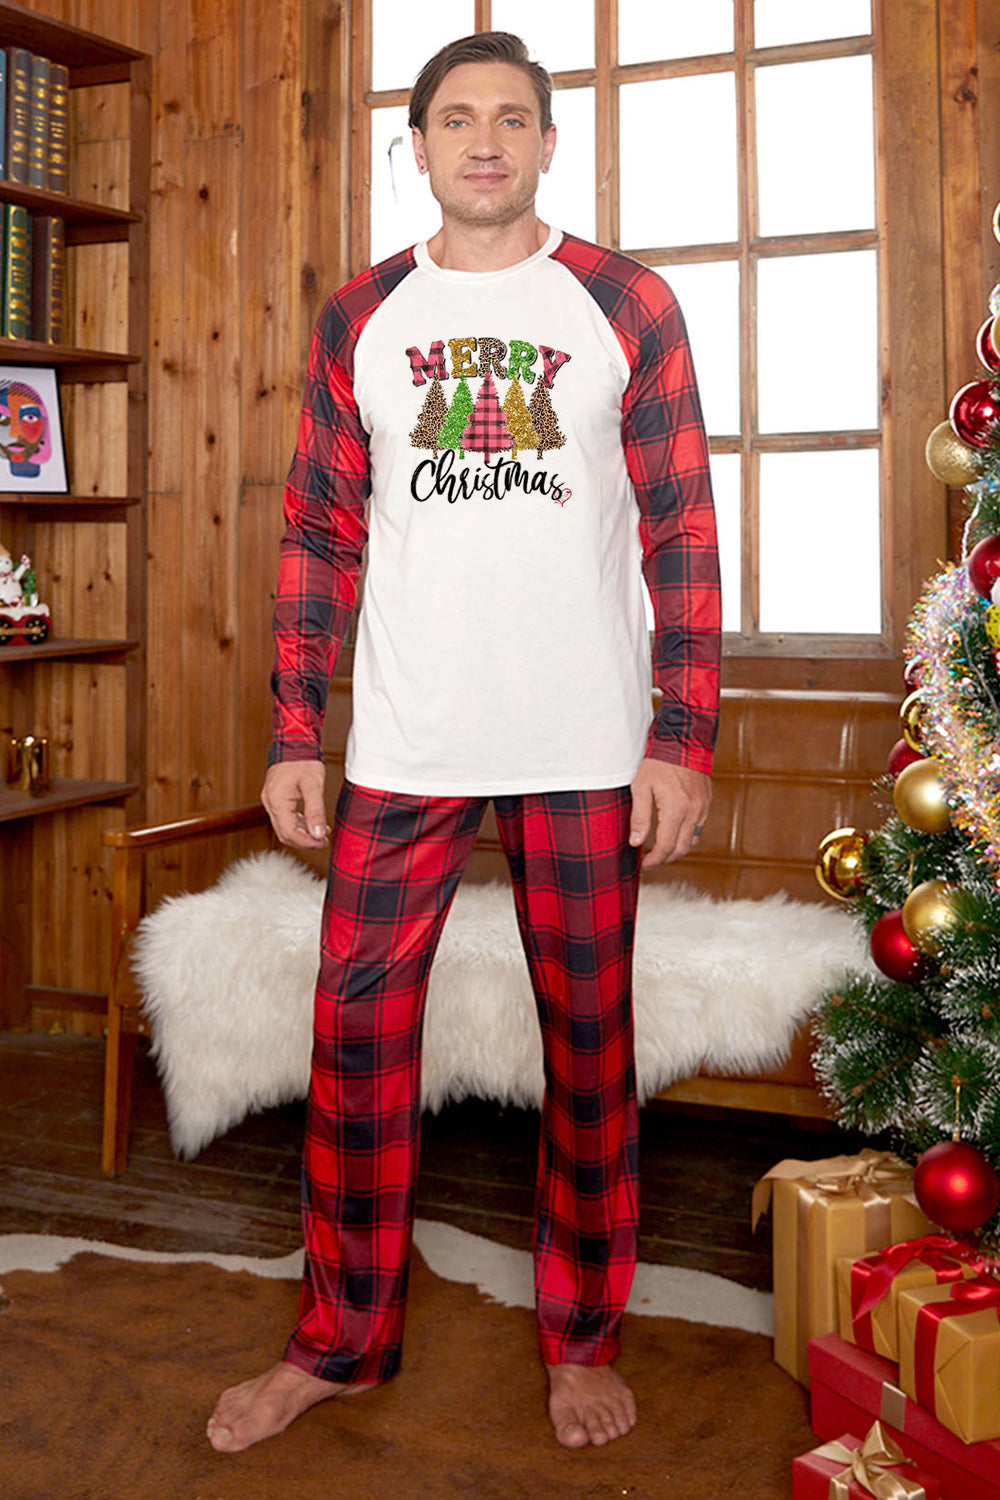 MERRY CHRISTMAS Graphic Top and Plaid Pants Set